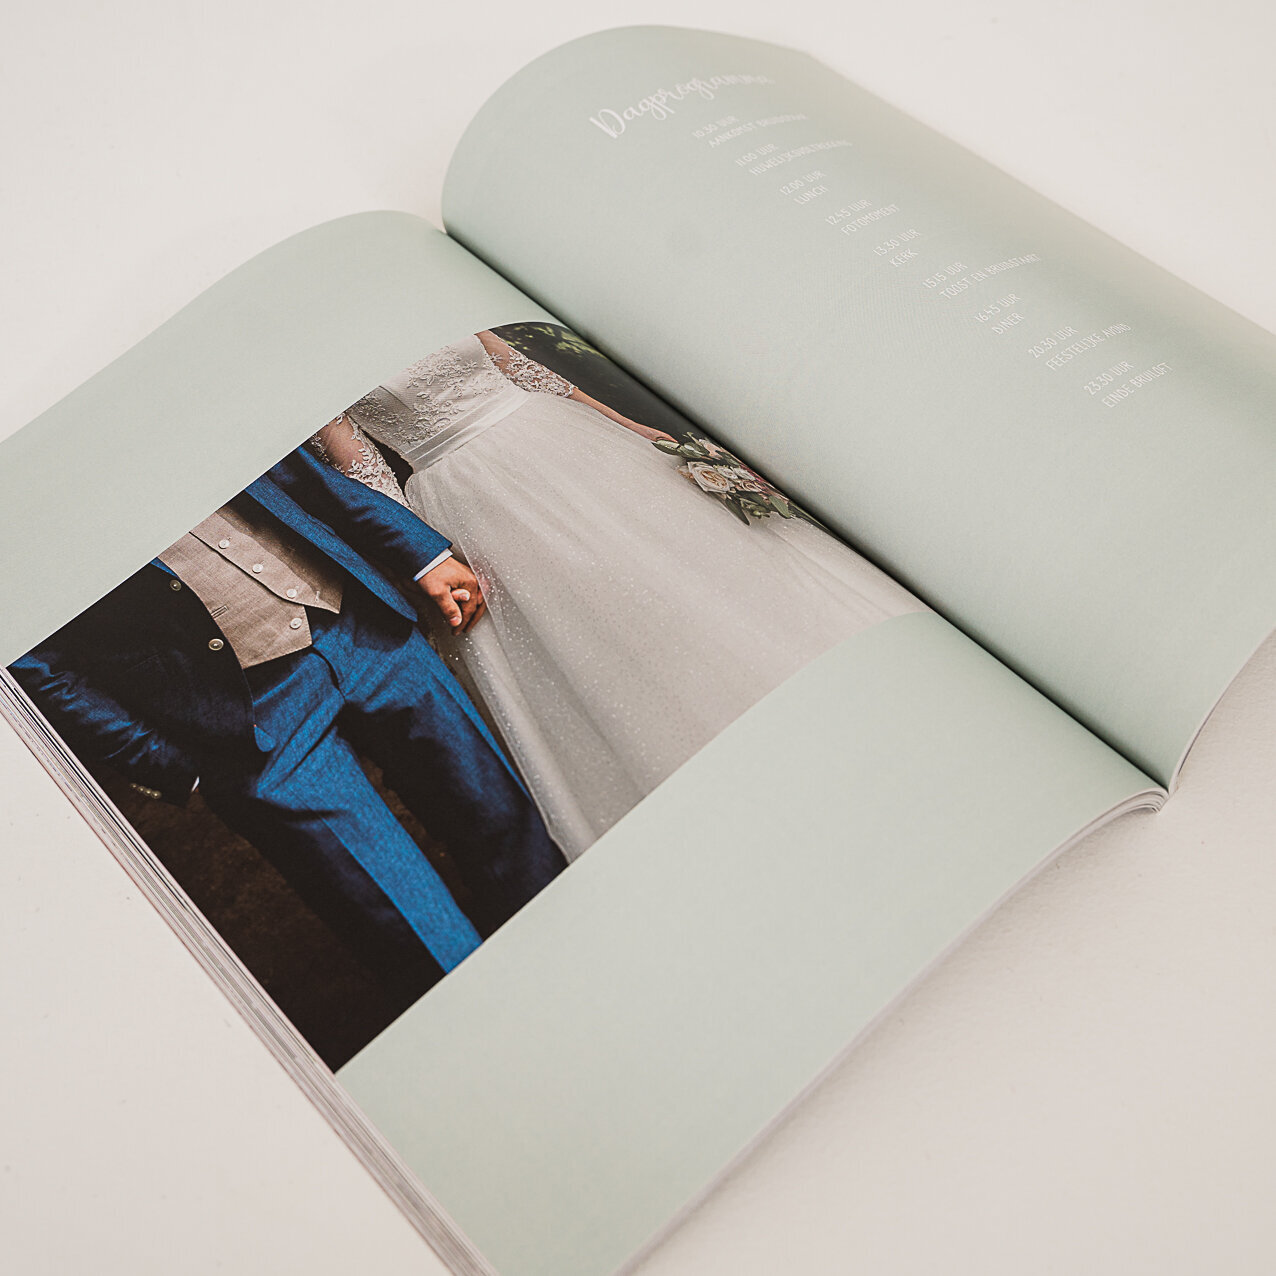 Dagplanning en trouwfoto in minimalistic magazine